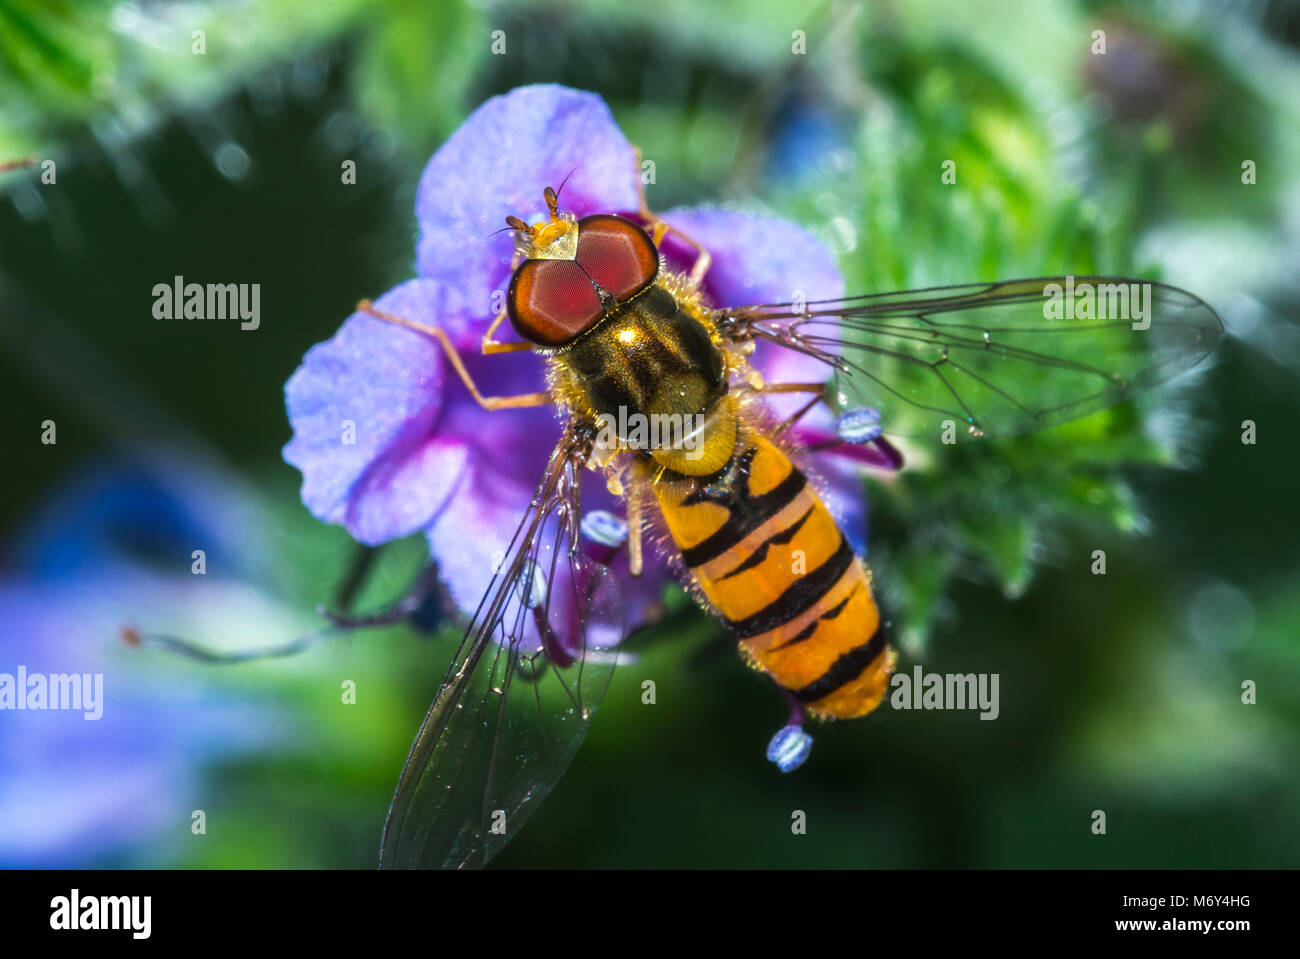 Flower flies harmless flies and valuable pollinators Stock Photo